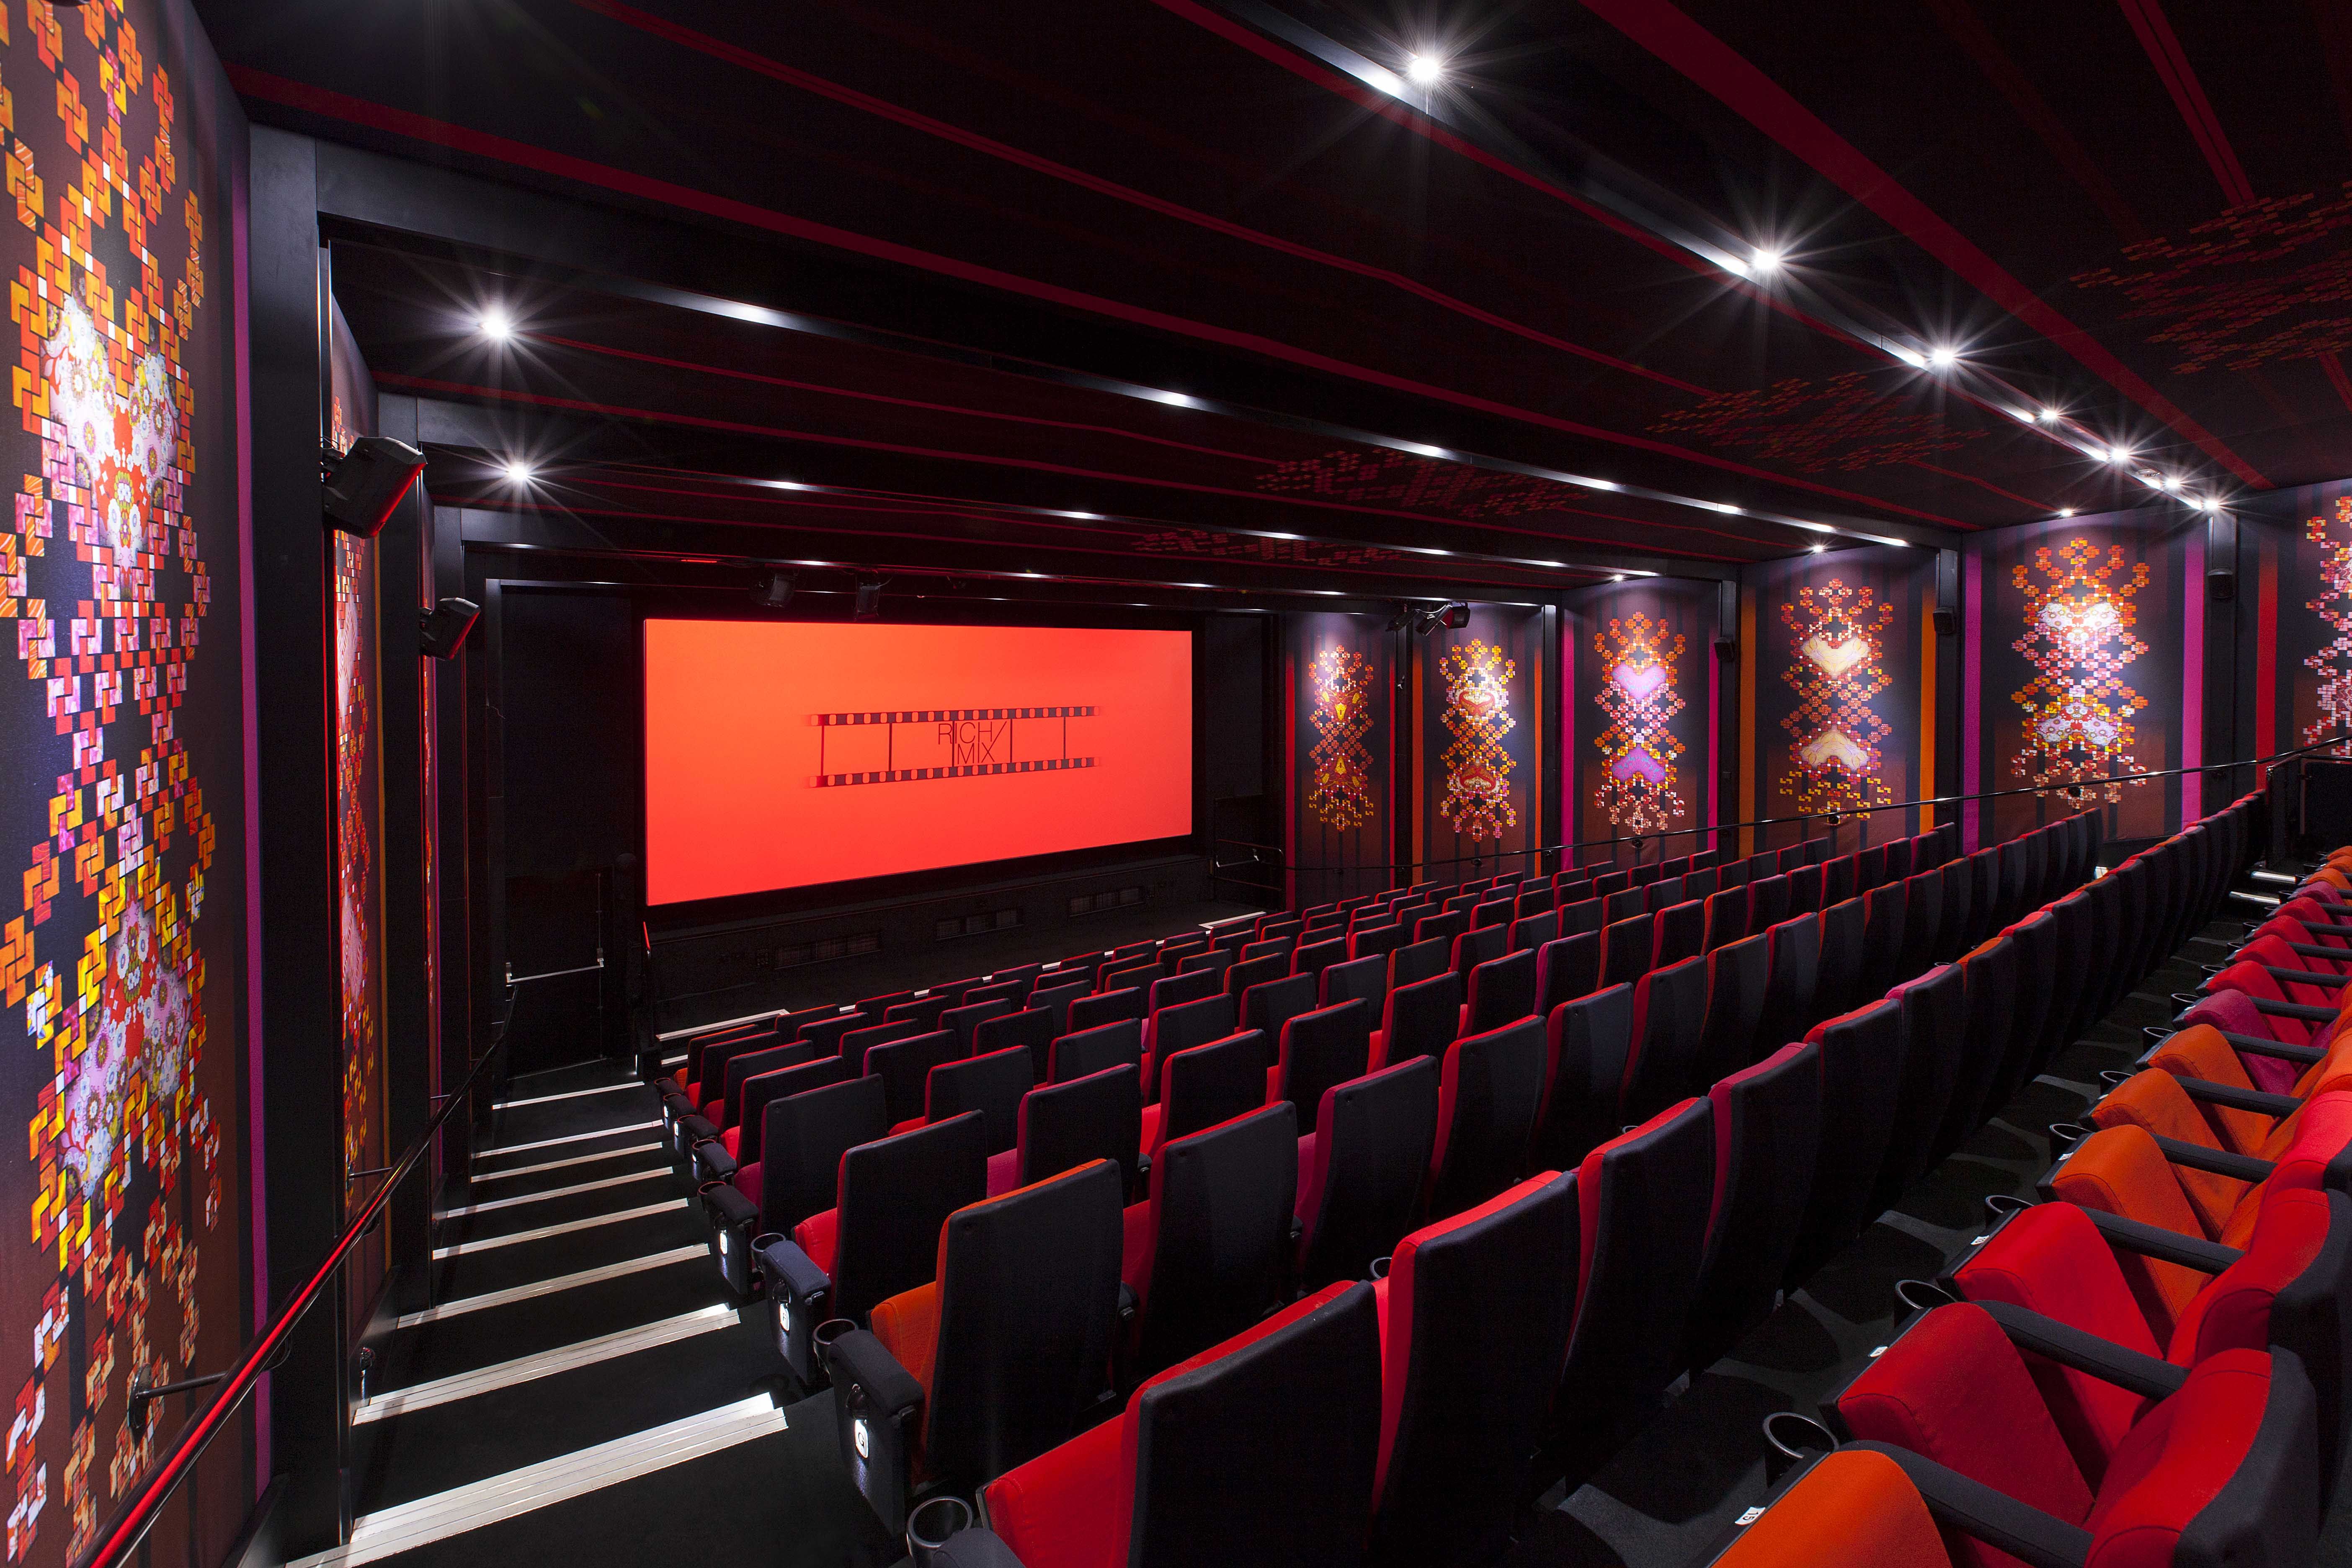 The very best cinemas in London (as picked by Londoners)